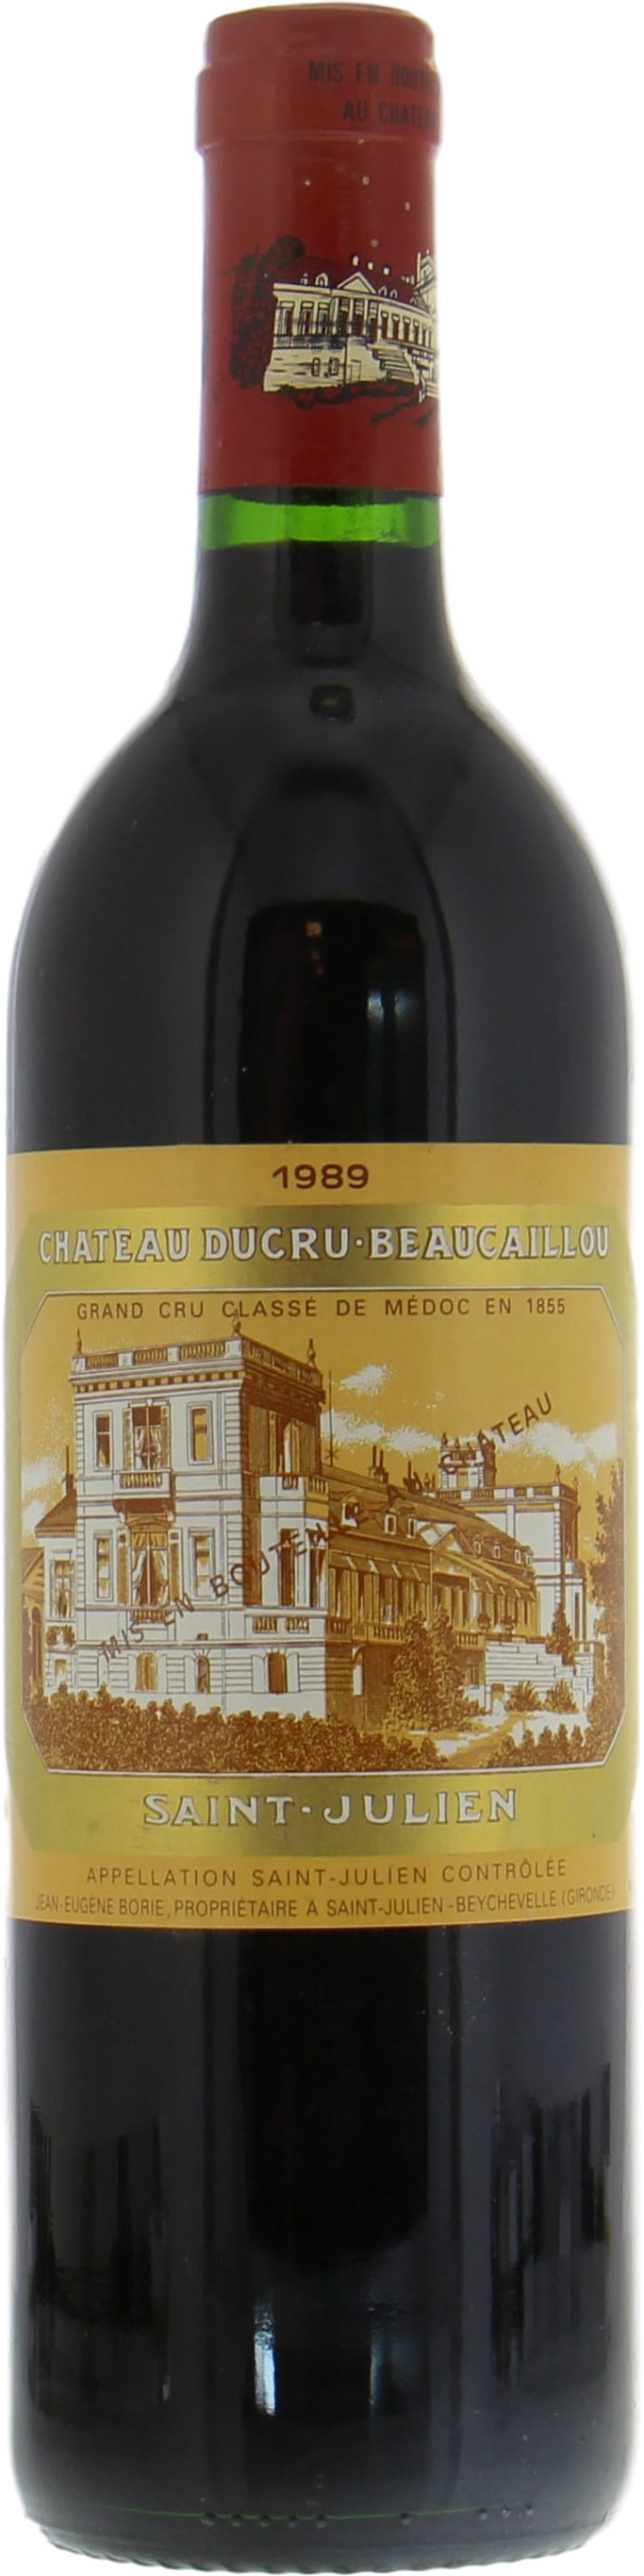 Chateau Ducru Beaucaillou - Chateau Ducru Beaucaillou 1989